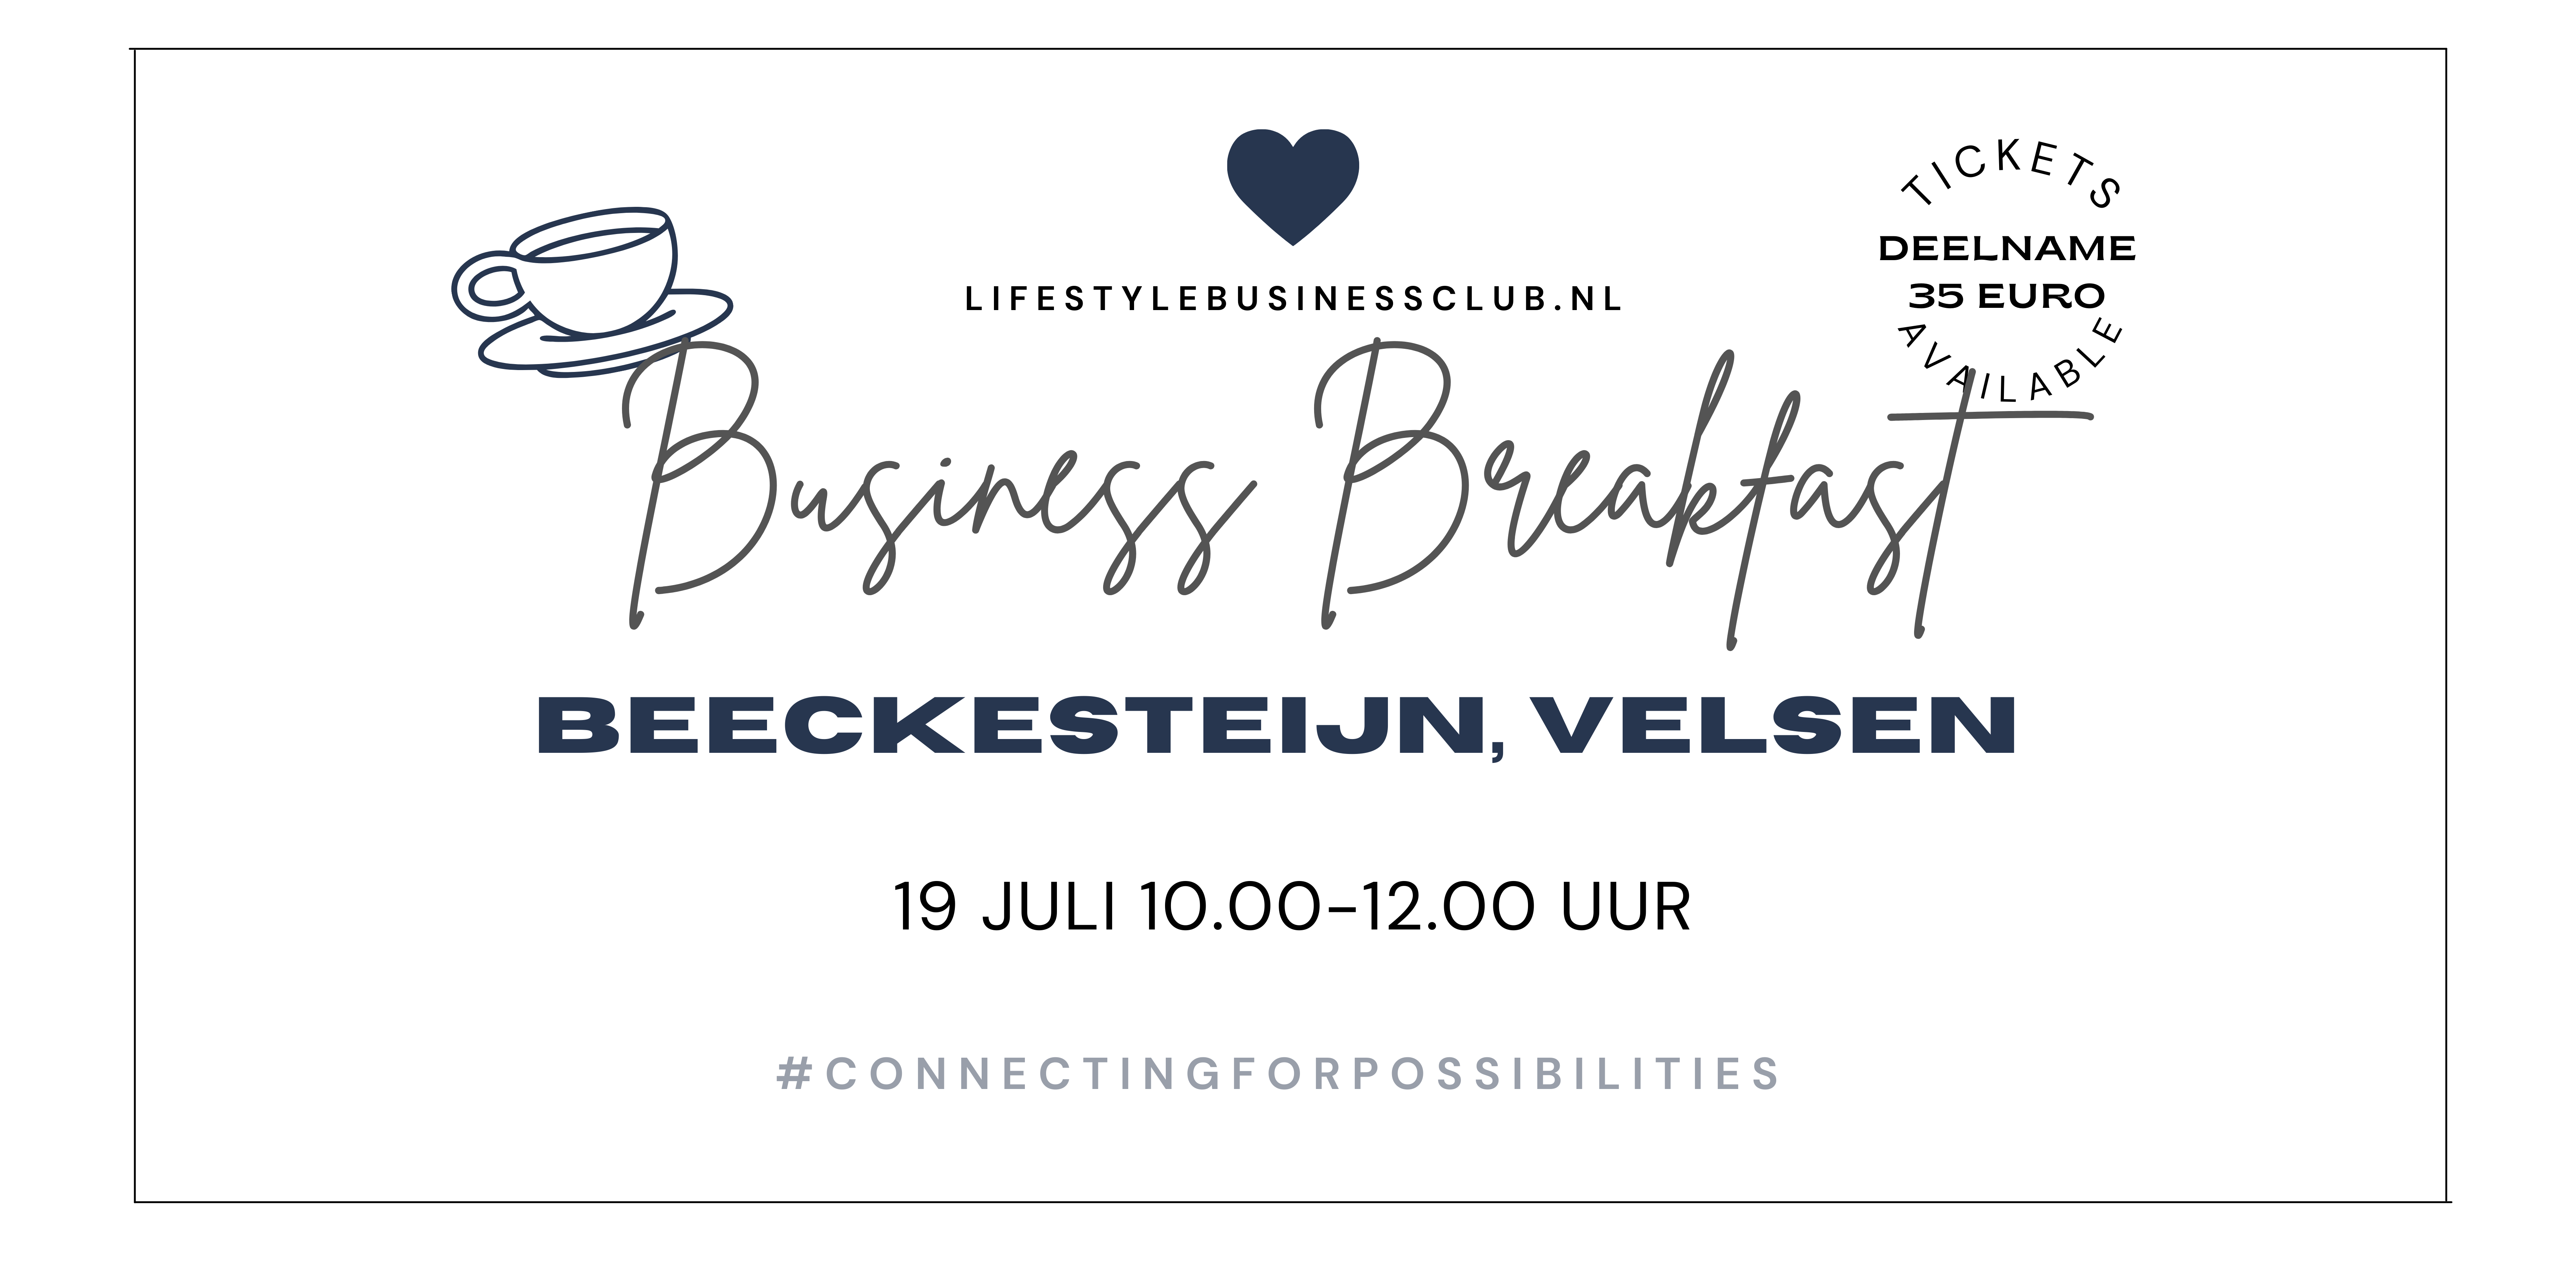 Lifestyle Business Breakfast Beeckesteijn